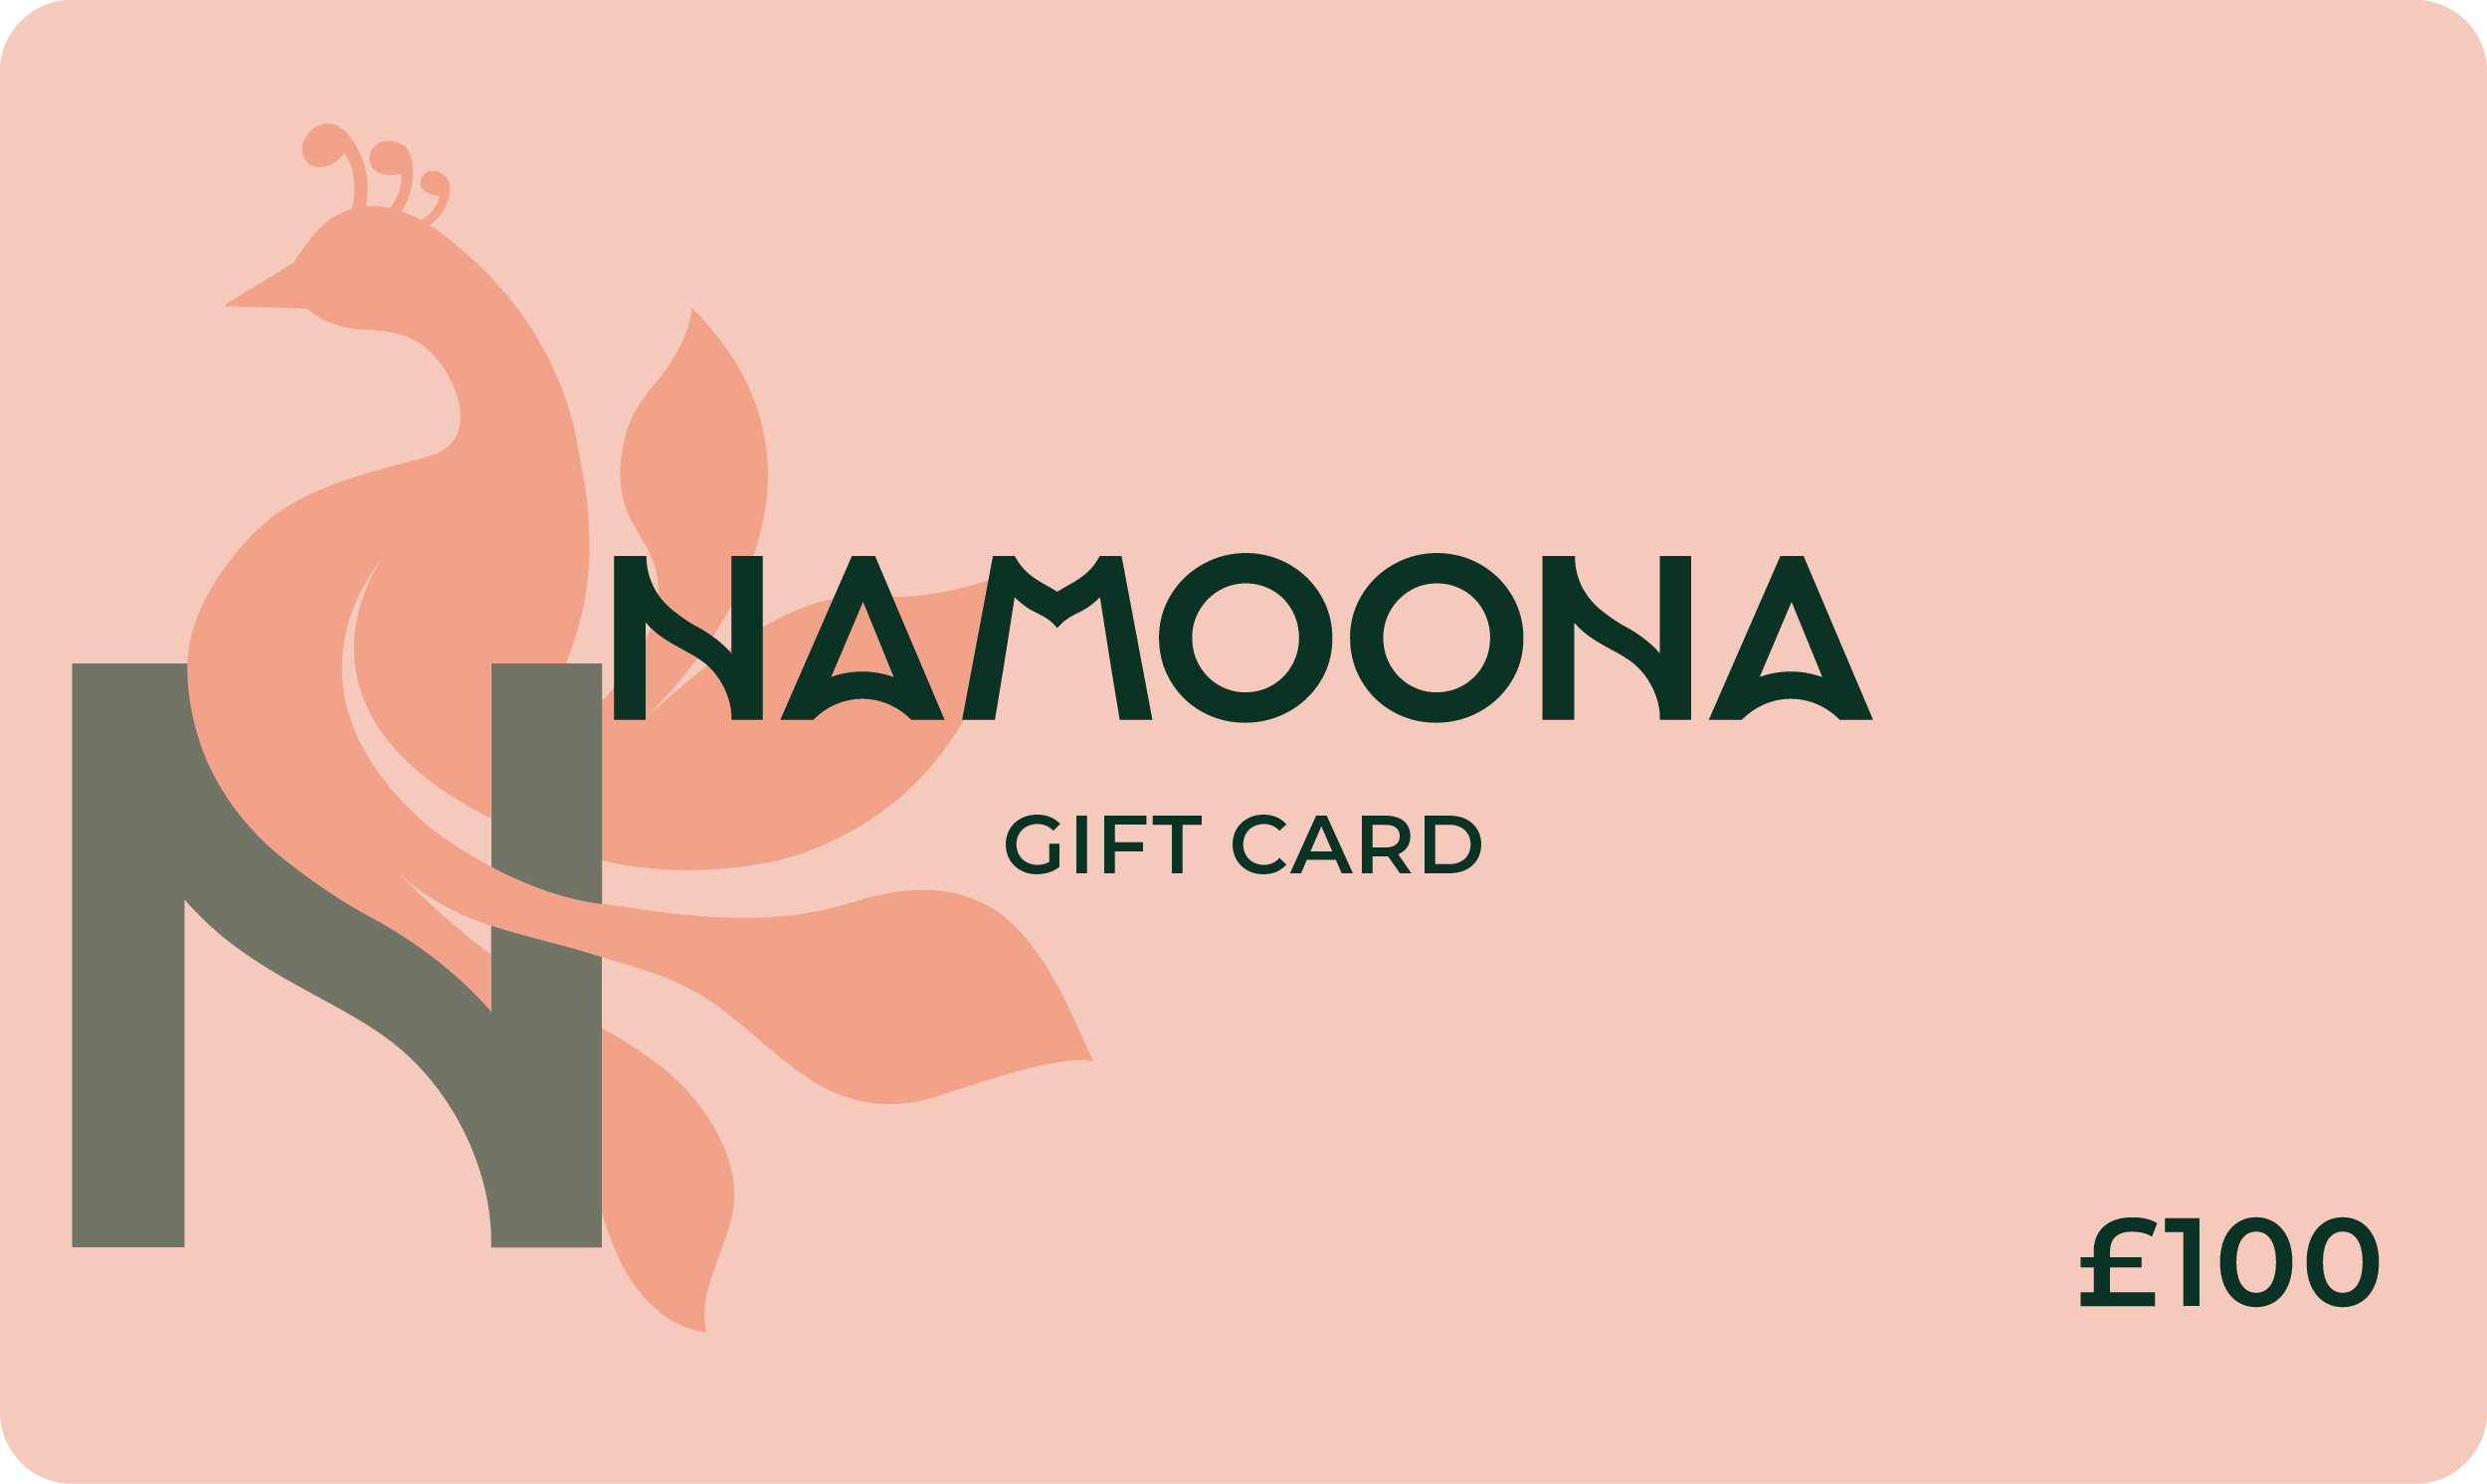 NAMOONA GIFT CARD